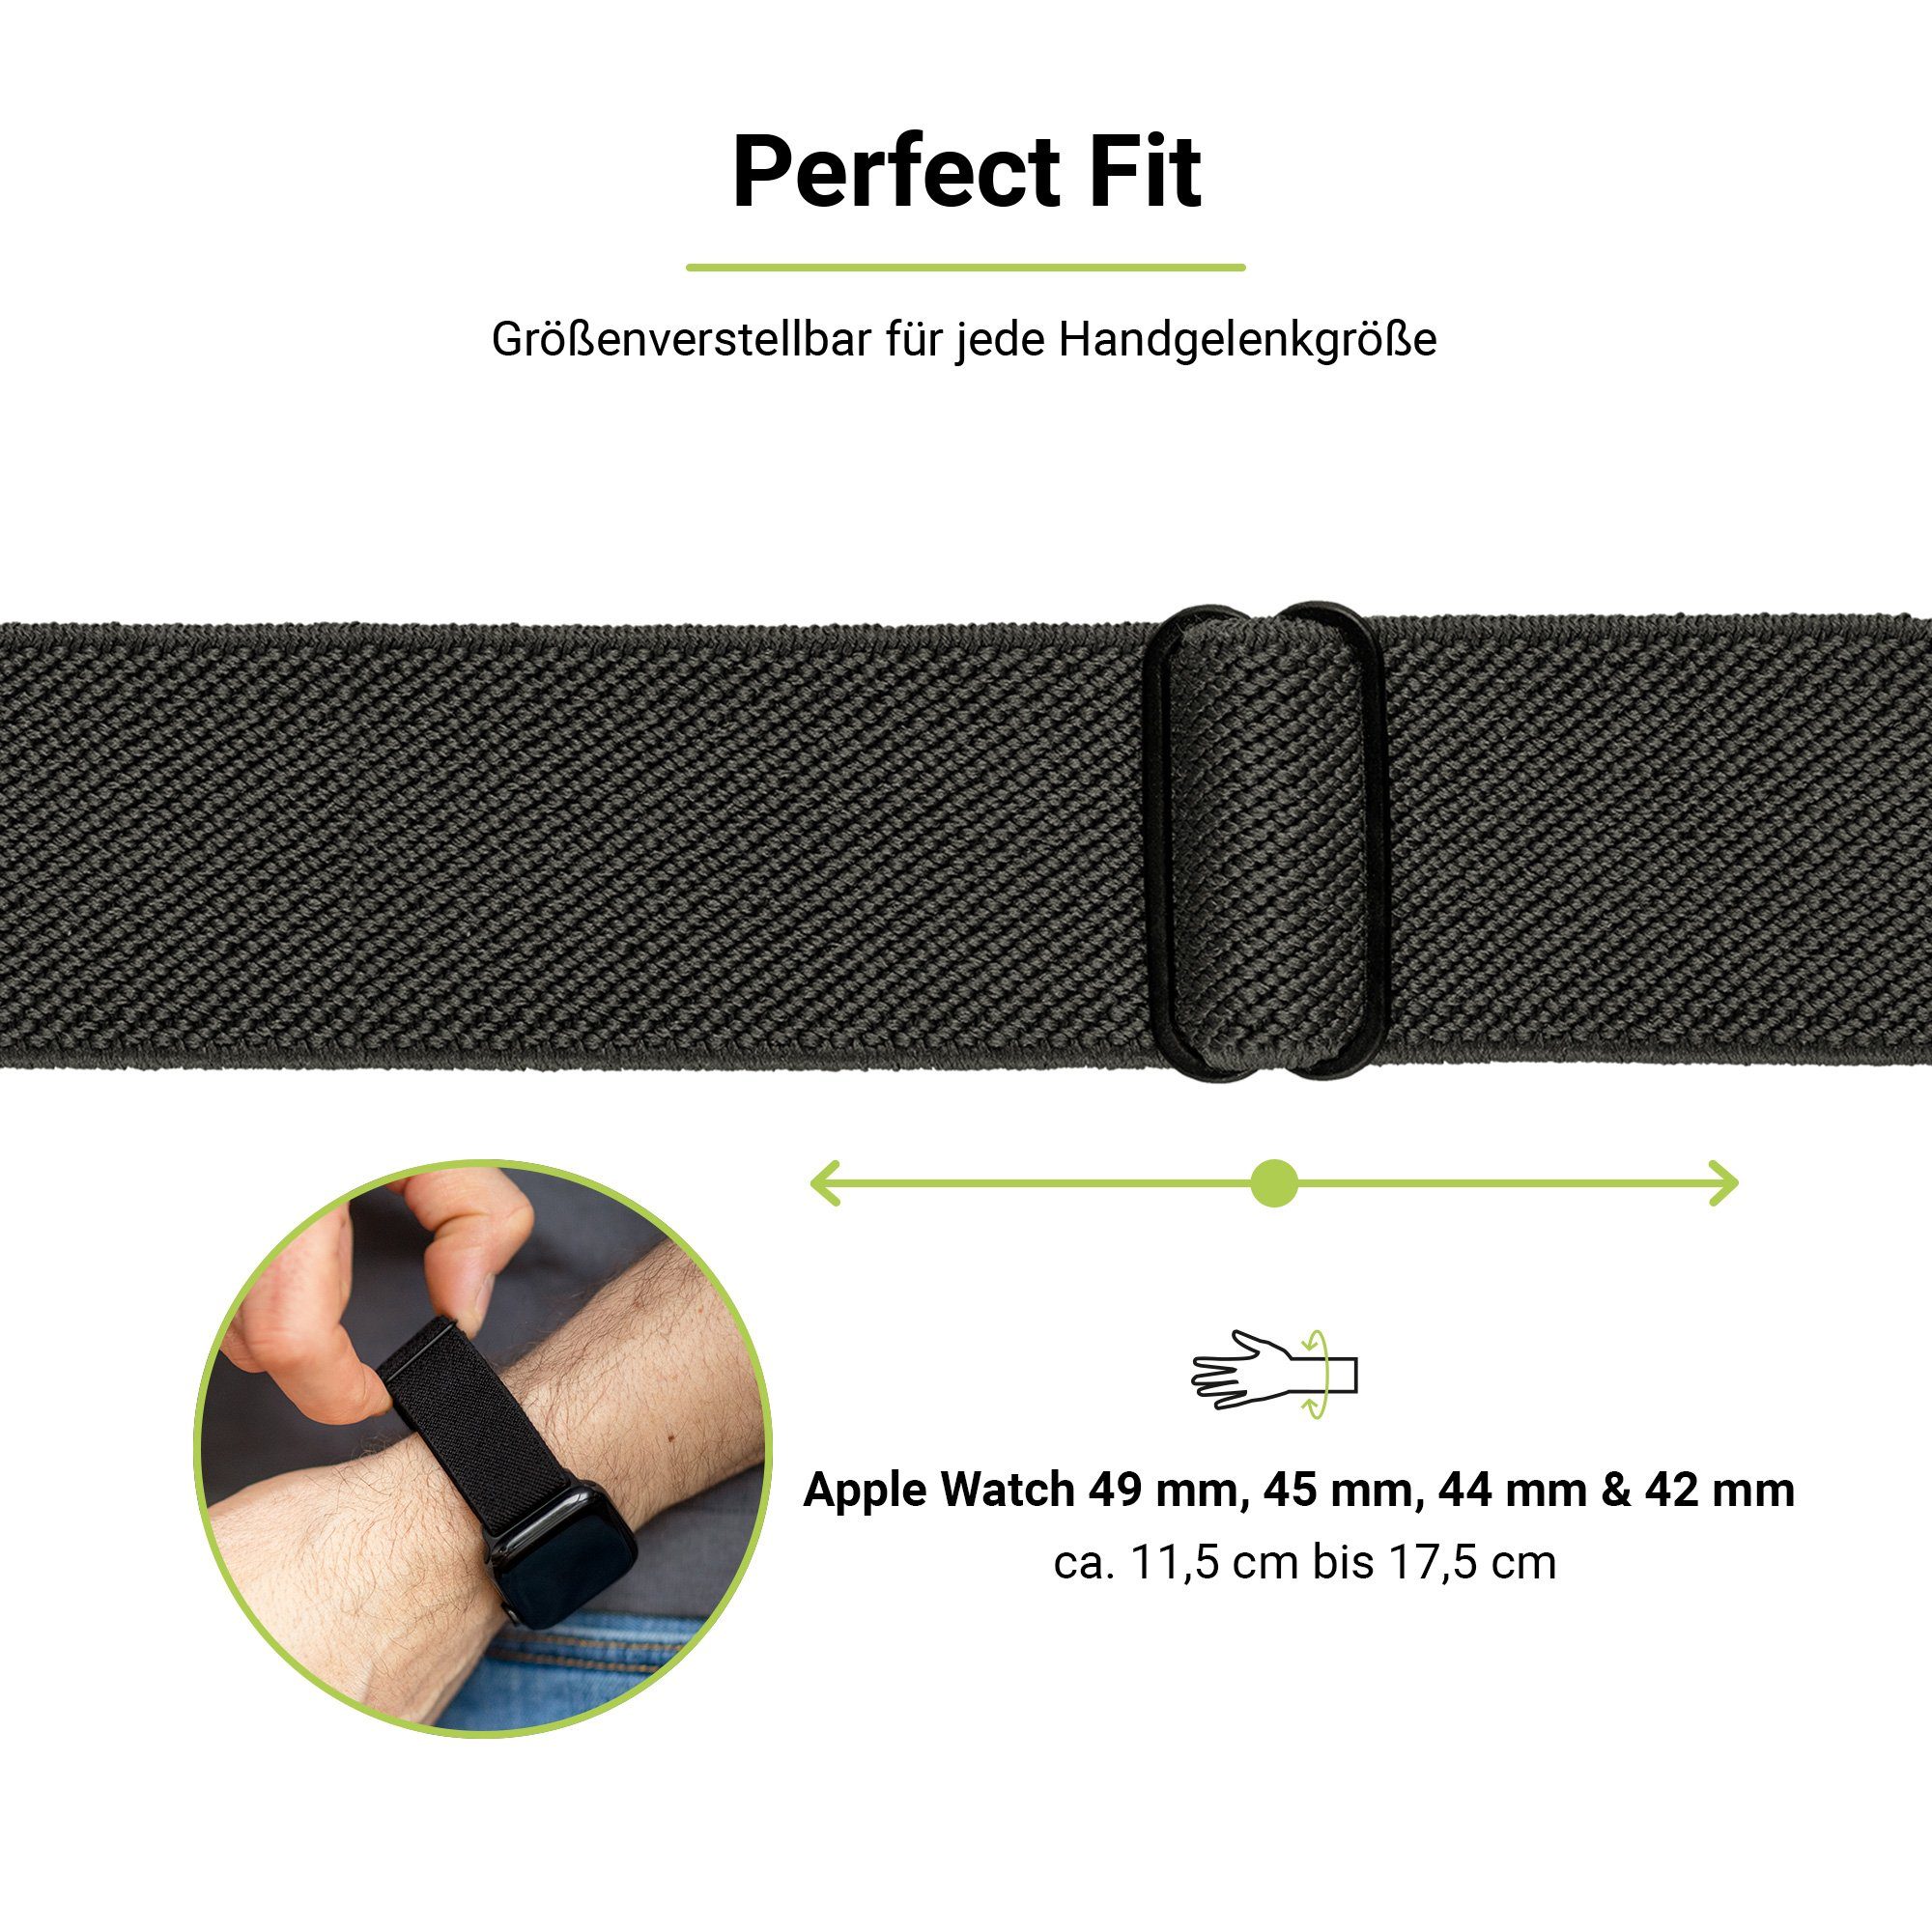 Textil Artwizz mit WatchBand 3-1 2 Space-Grau, Adapter, (49mm), Flex, & SE Ultra Uhrenarmband (45mm), Watch 9-7 (42mm) Apple 6-4 (44mm), Smartwatch-Armband /